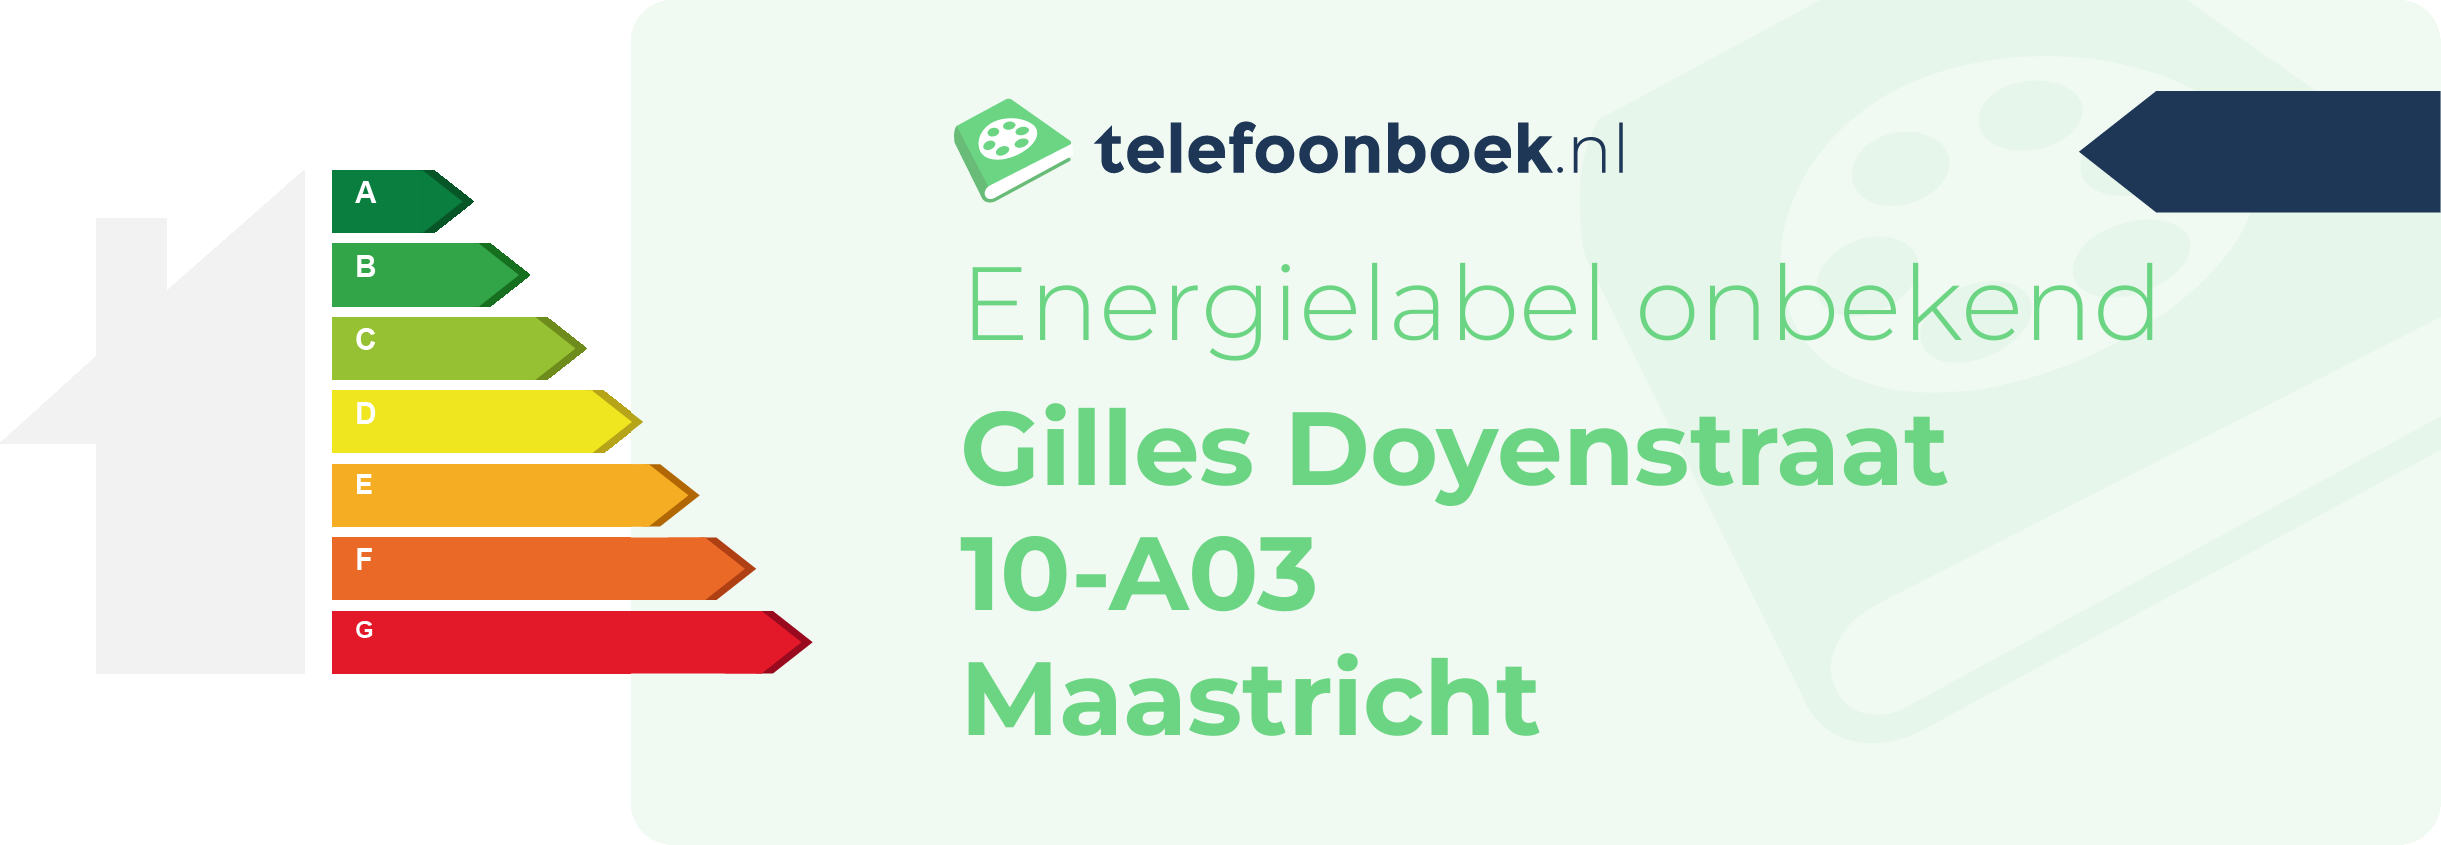 Energielabel Gilles Doyenstraat 10-A03 Maastricht